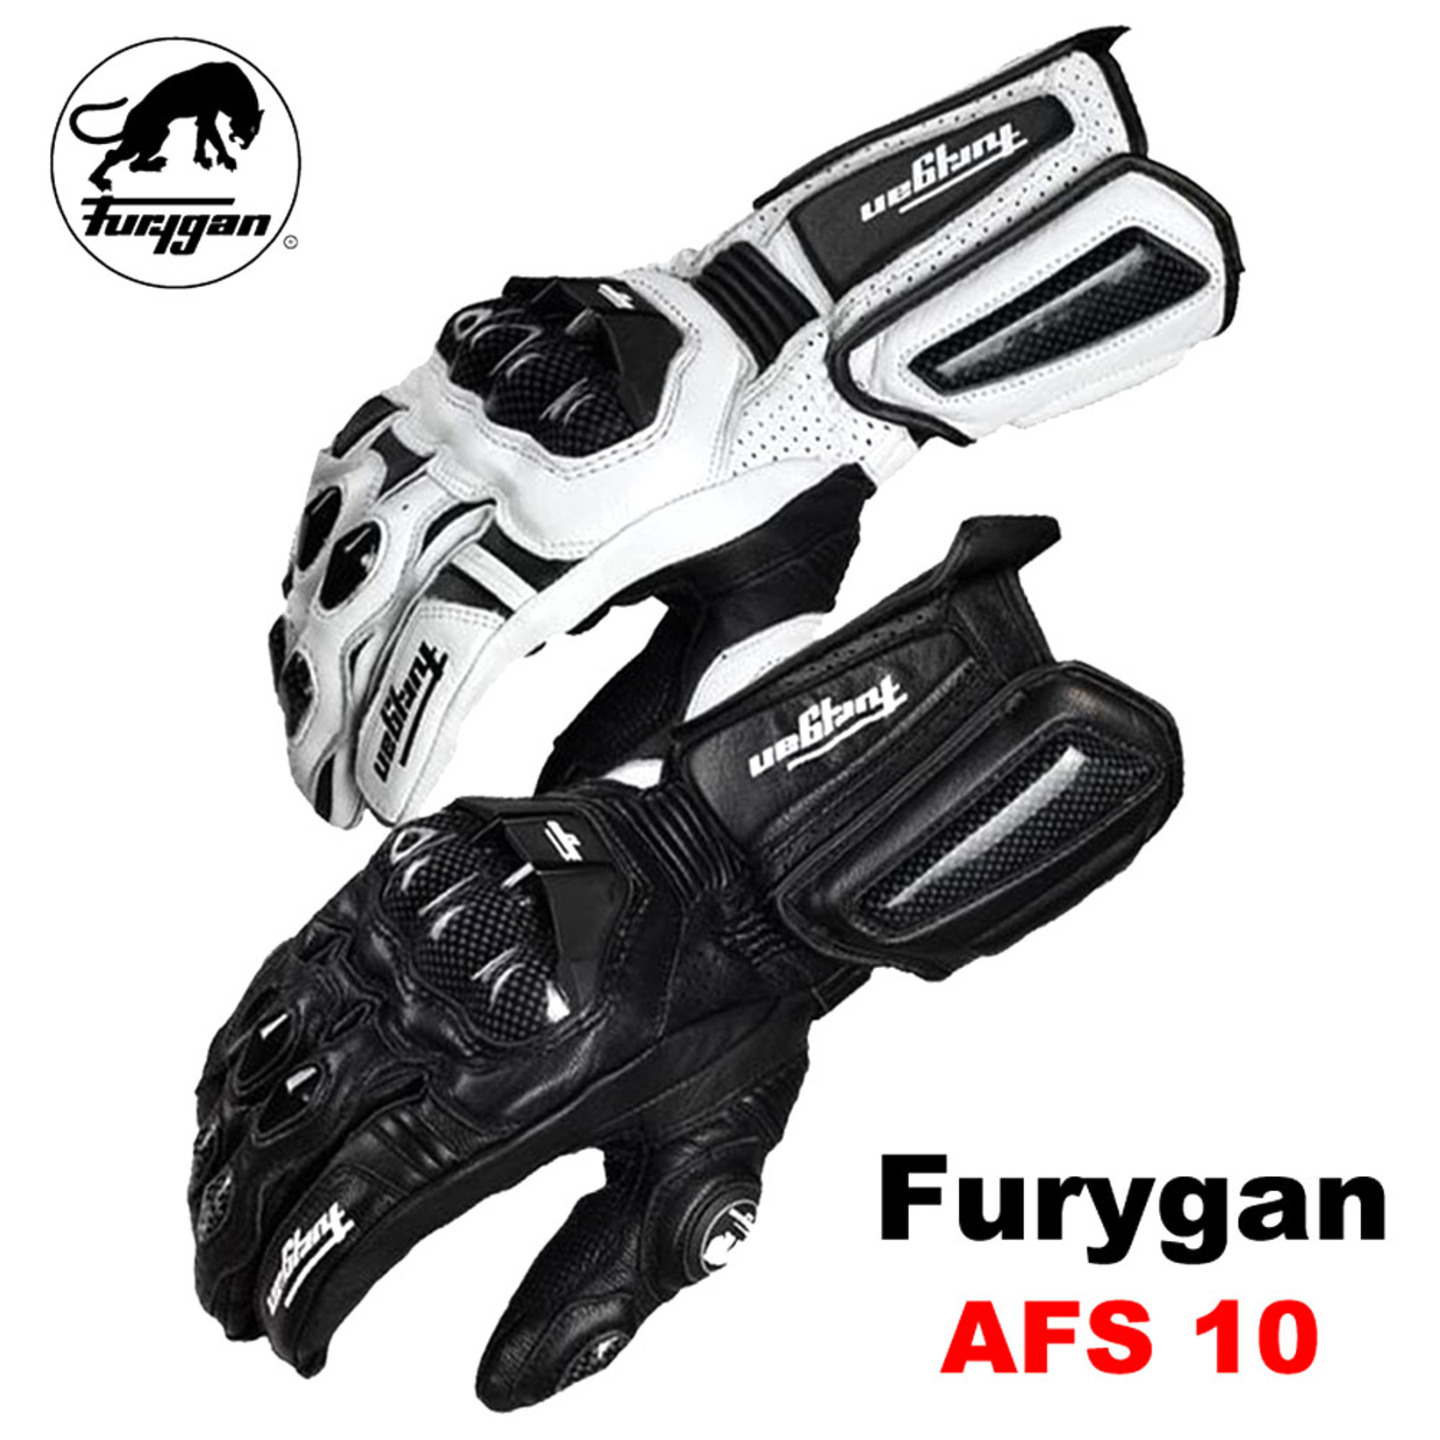 Furygan AFS10 full gloves carbon fiber leather glove white black